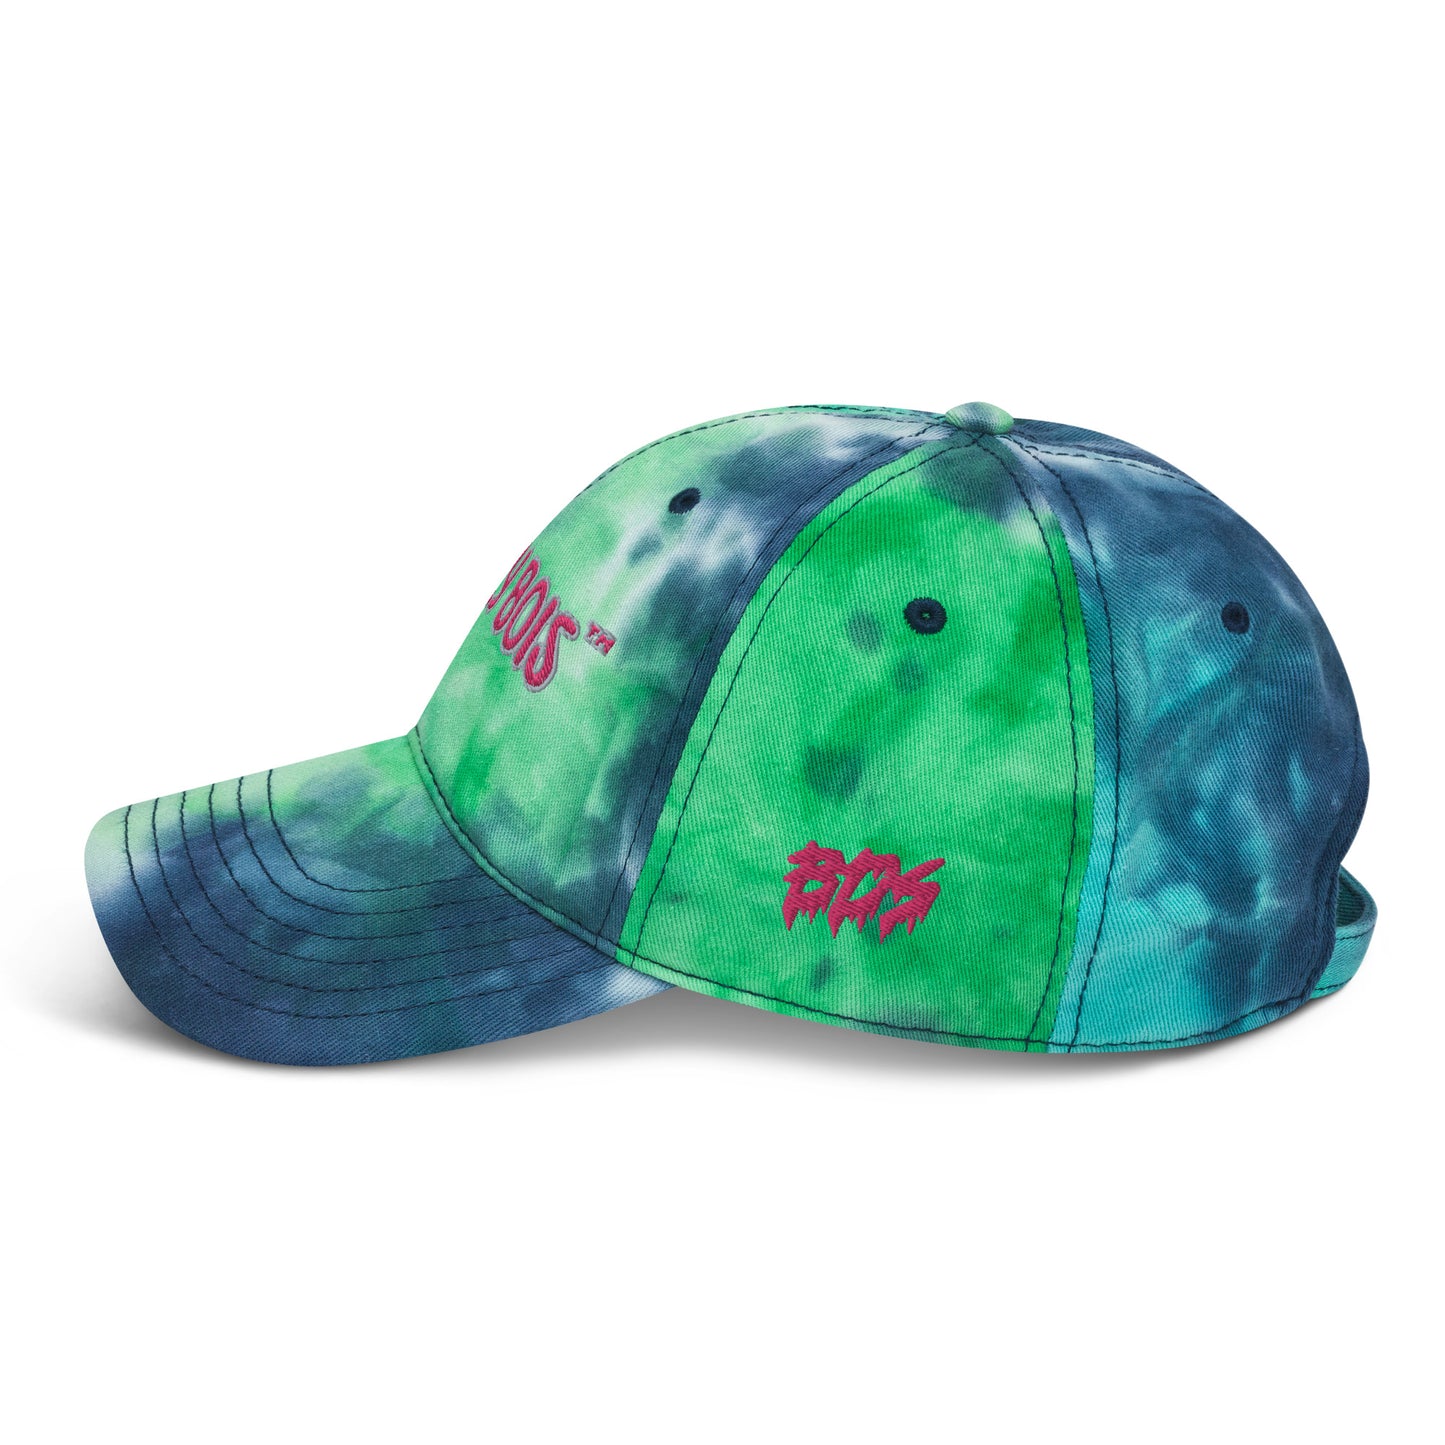 StoneyBois™ Tie dye hat